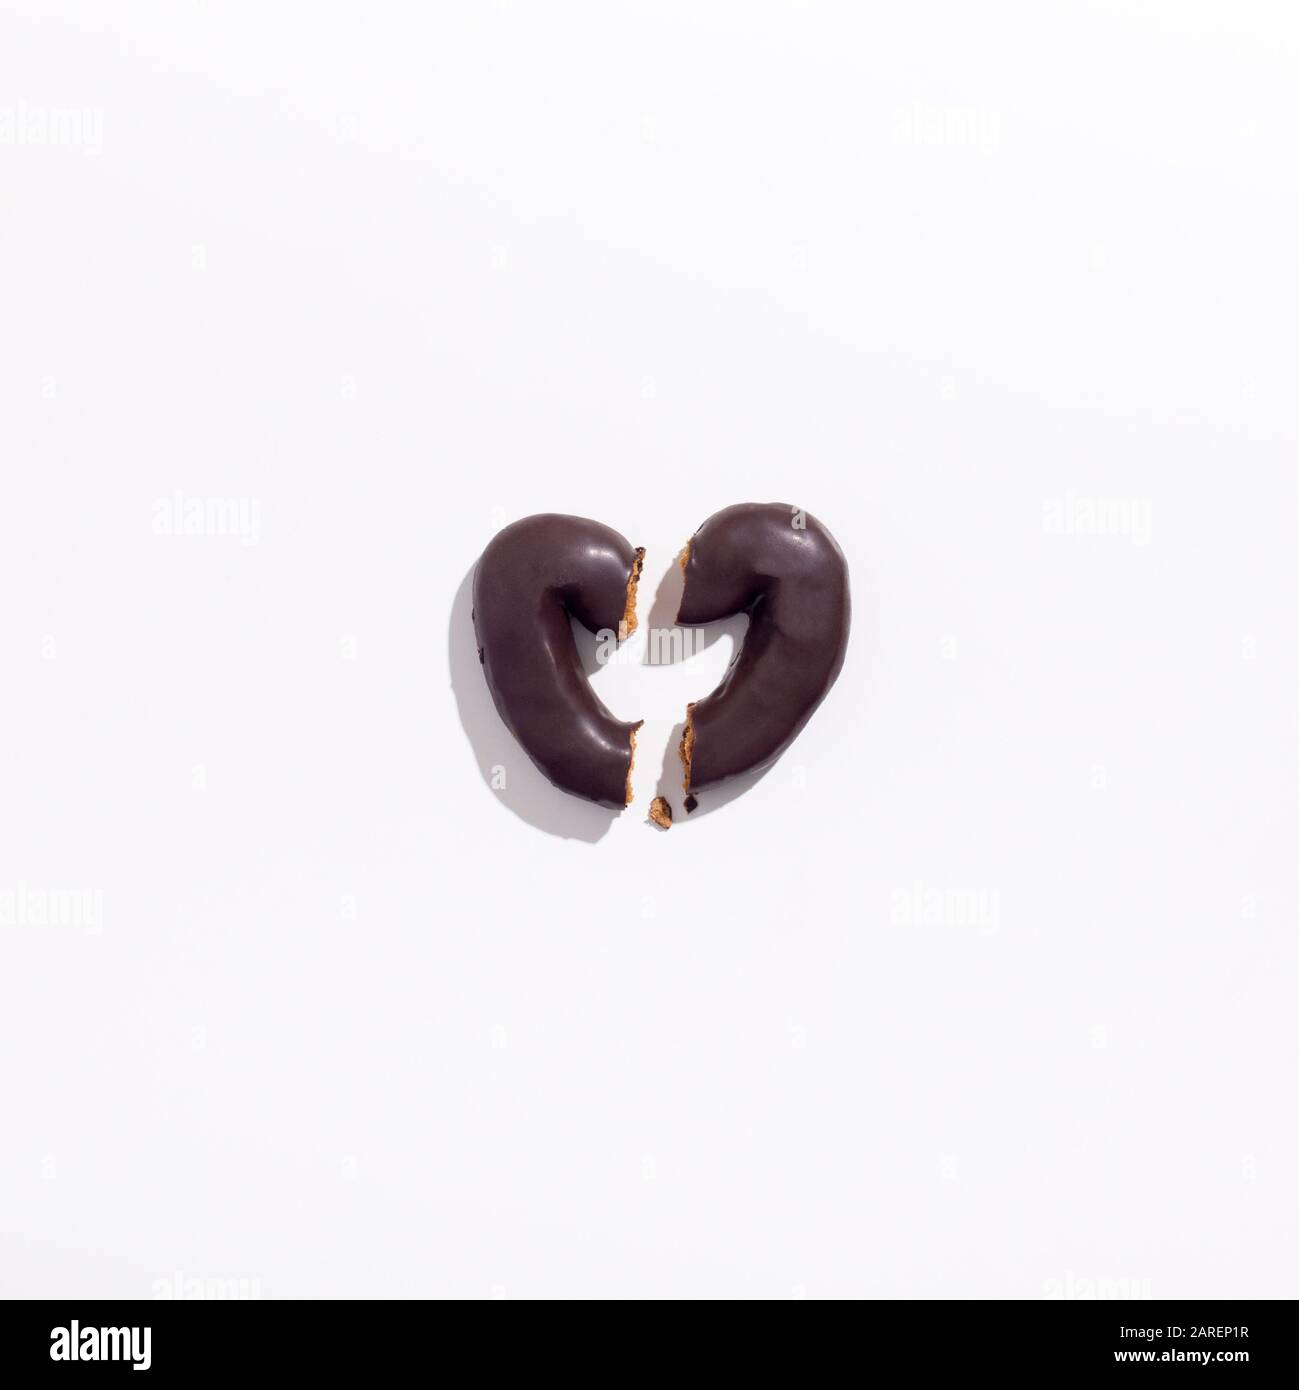 Broken heart shape bisquit on white background Stock Photo - Alamy